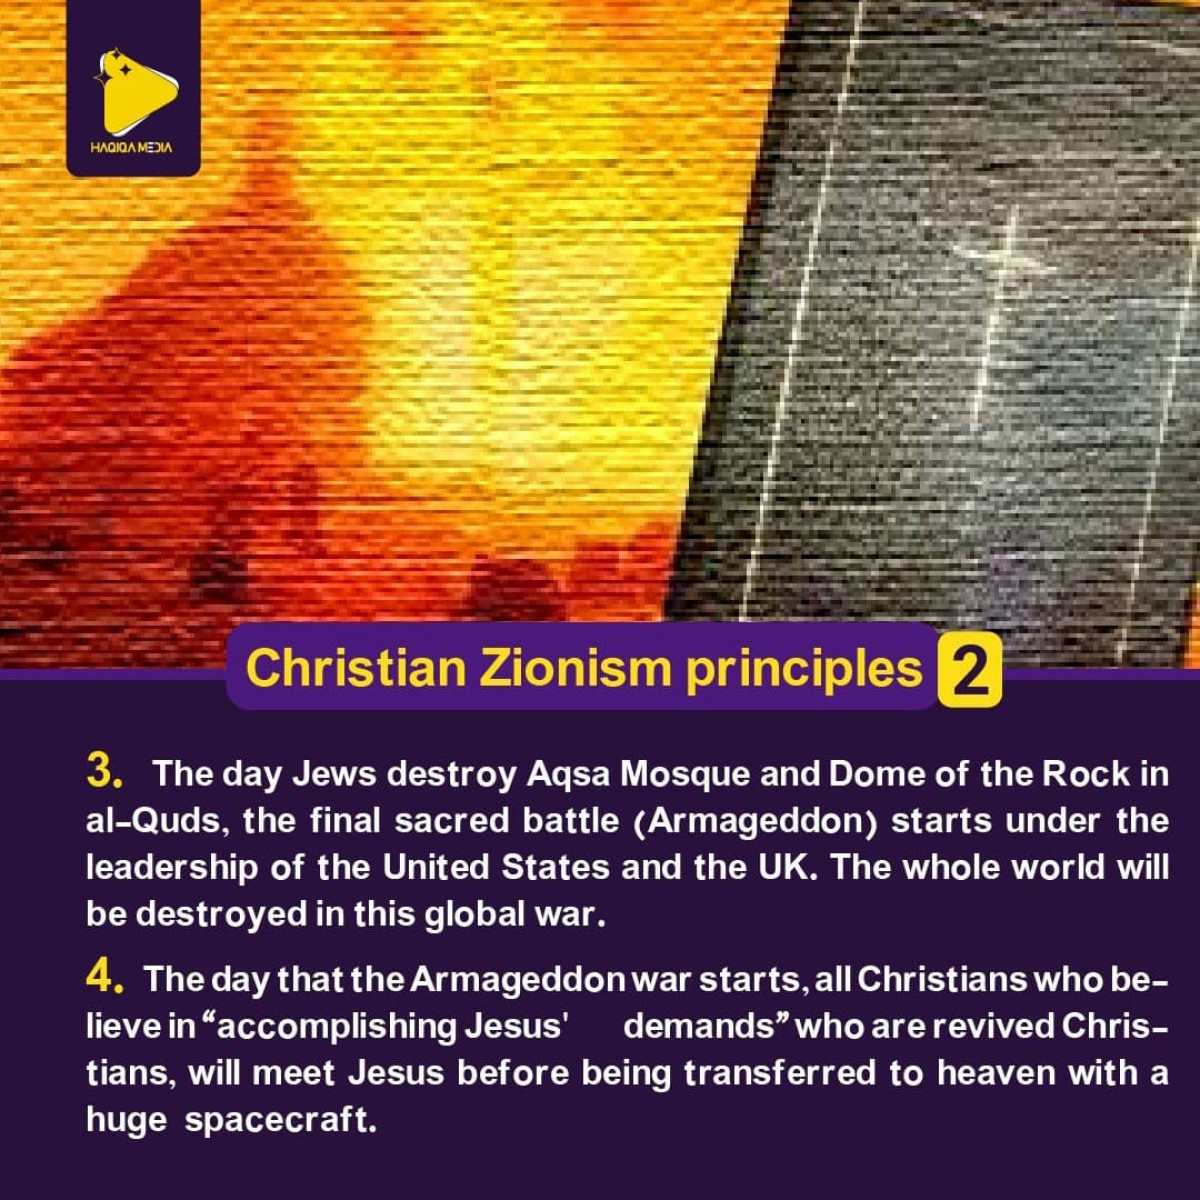 Christian Zionism principles 2